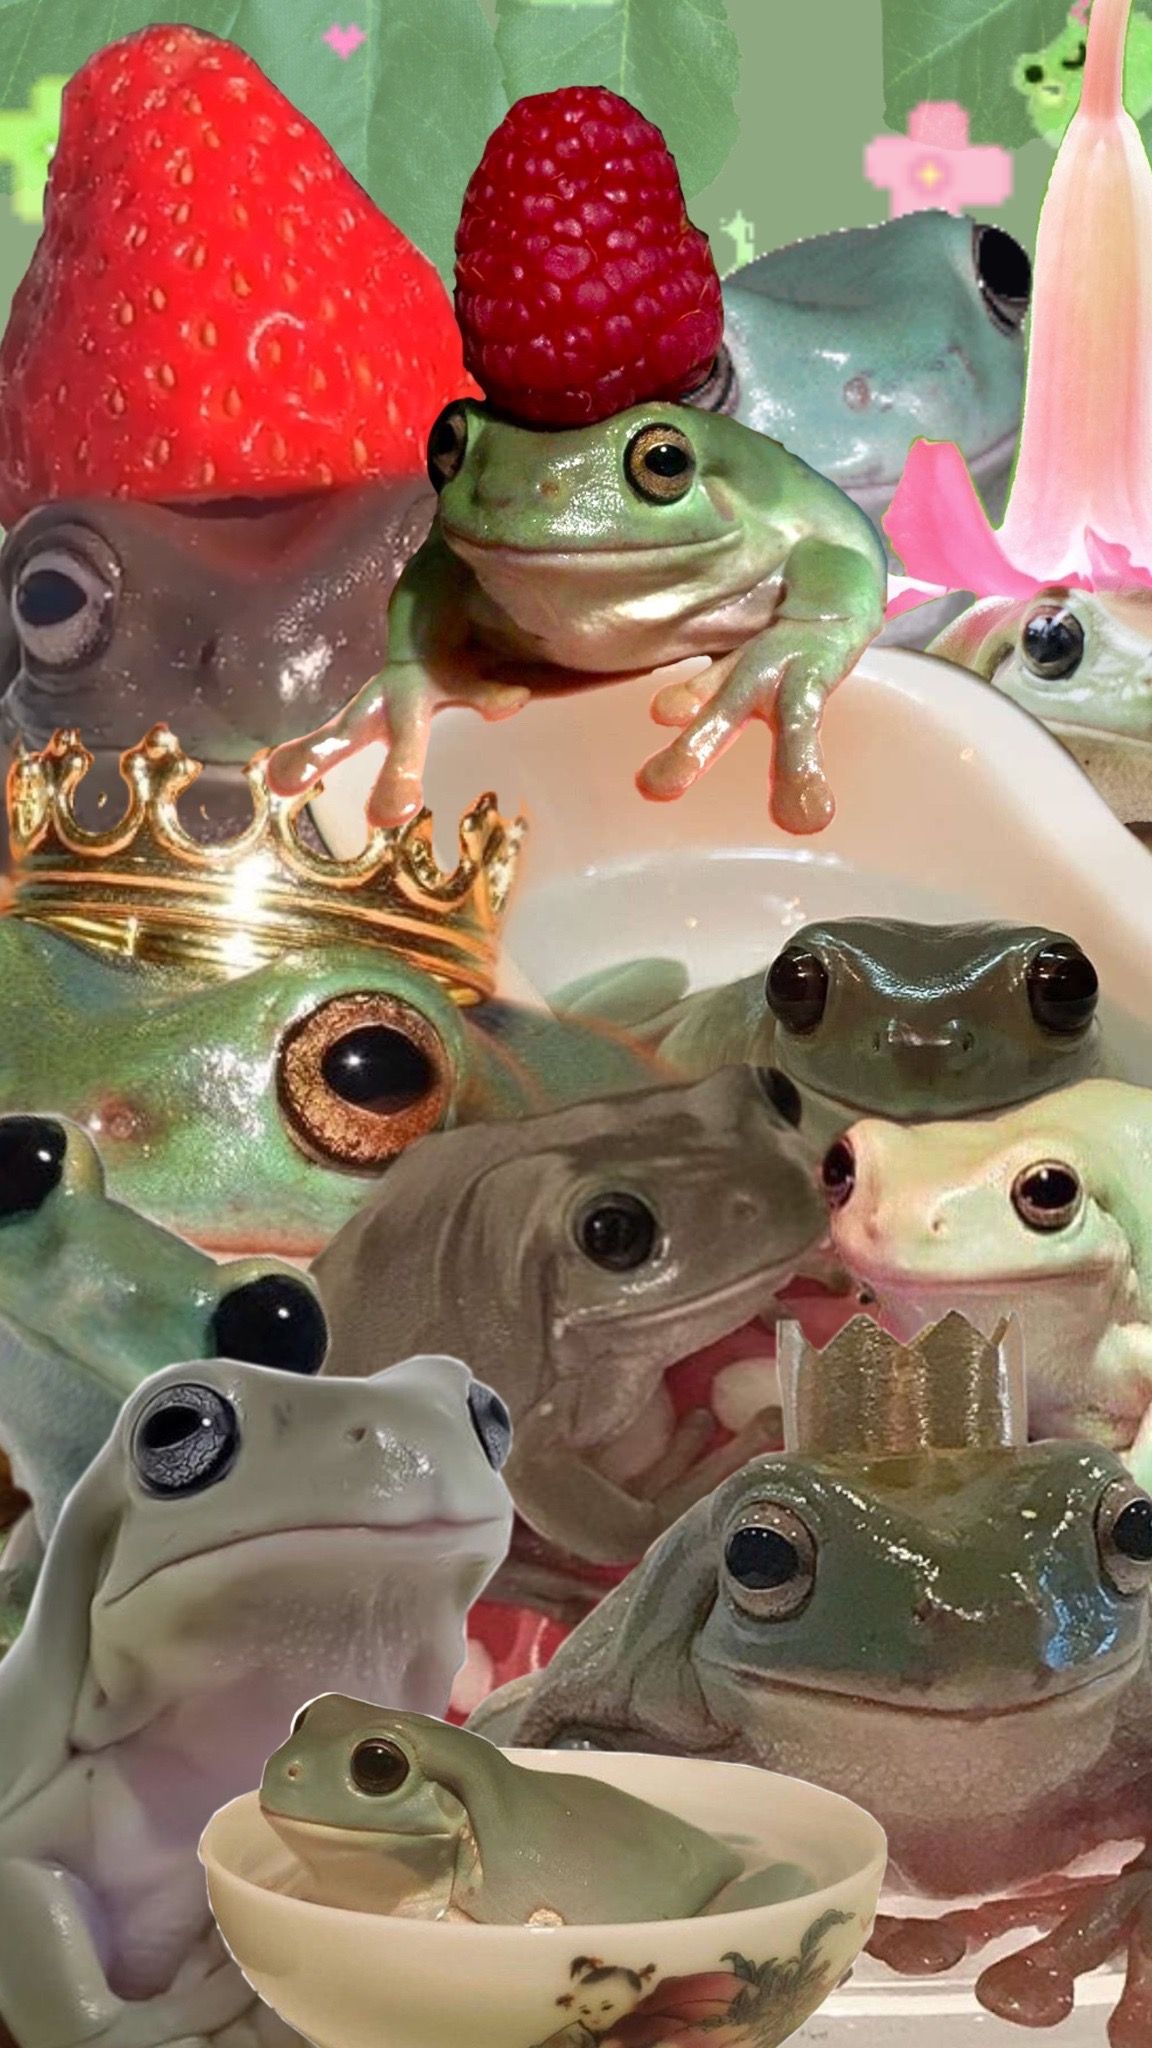 Aesthetic Frog Wallpapers